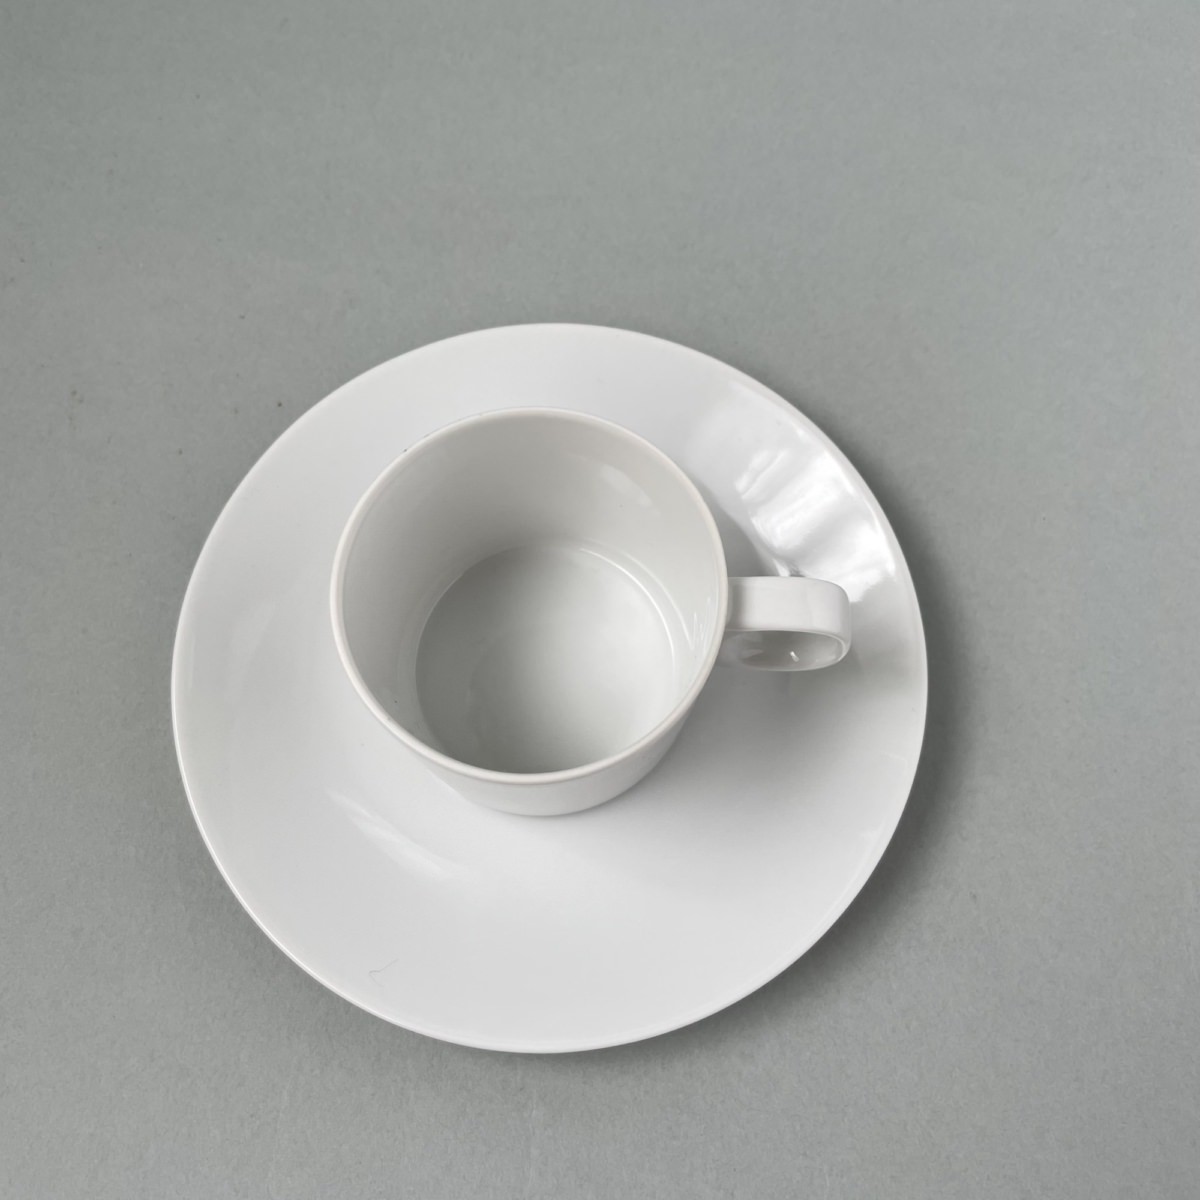 OthersRosenthal studio-line Demitasse cup & saucer